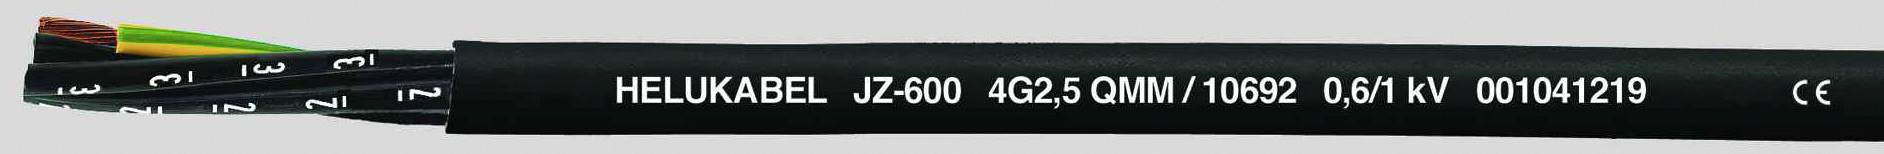 HELUKABEL JZ-600 Steuerleitung 7 G 1.50 mm² Schwarz 10664-1000 1000 m